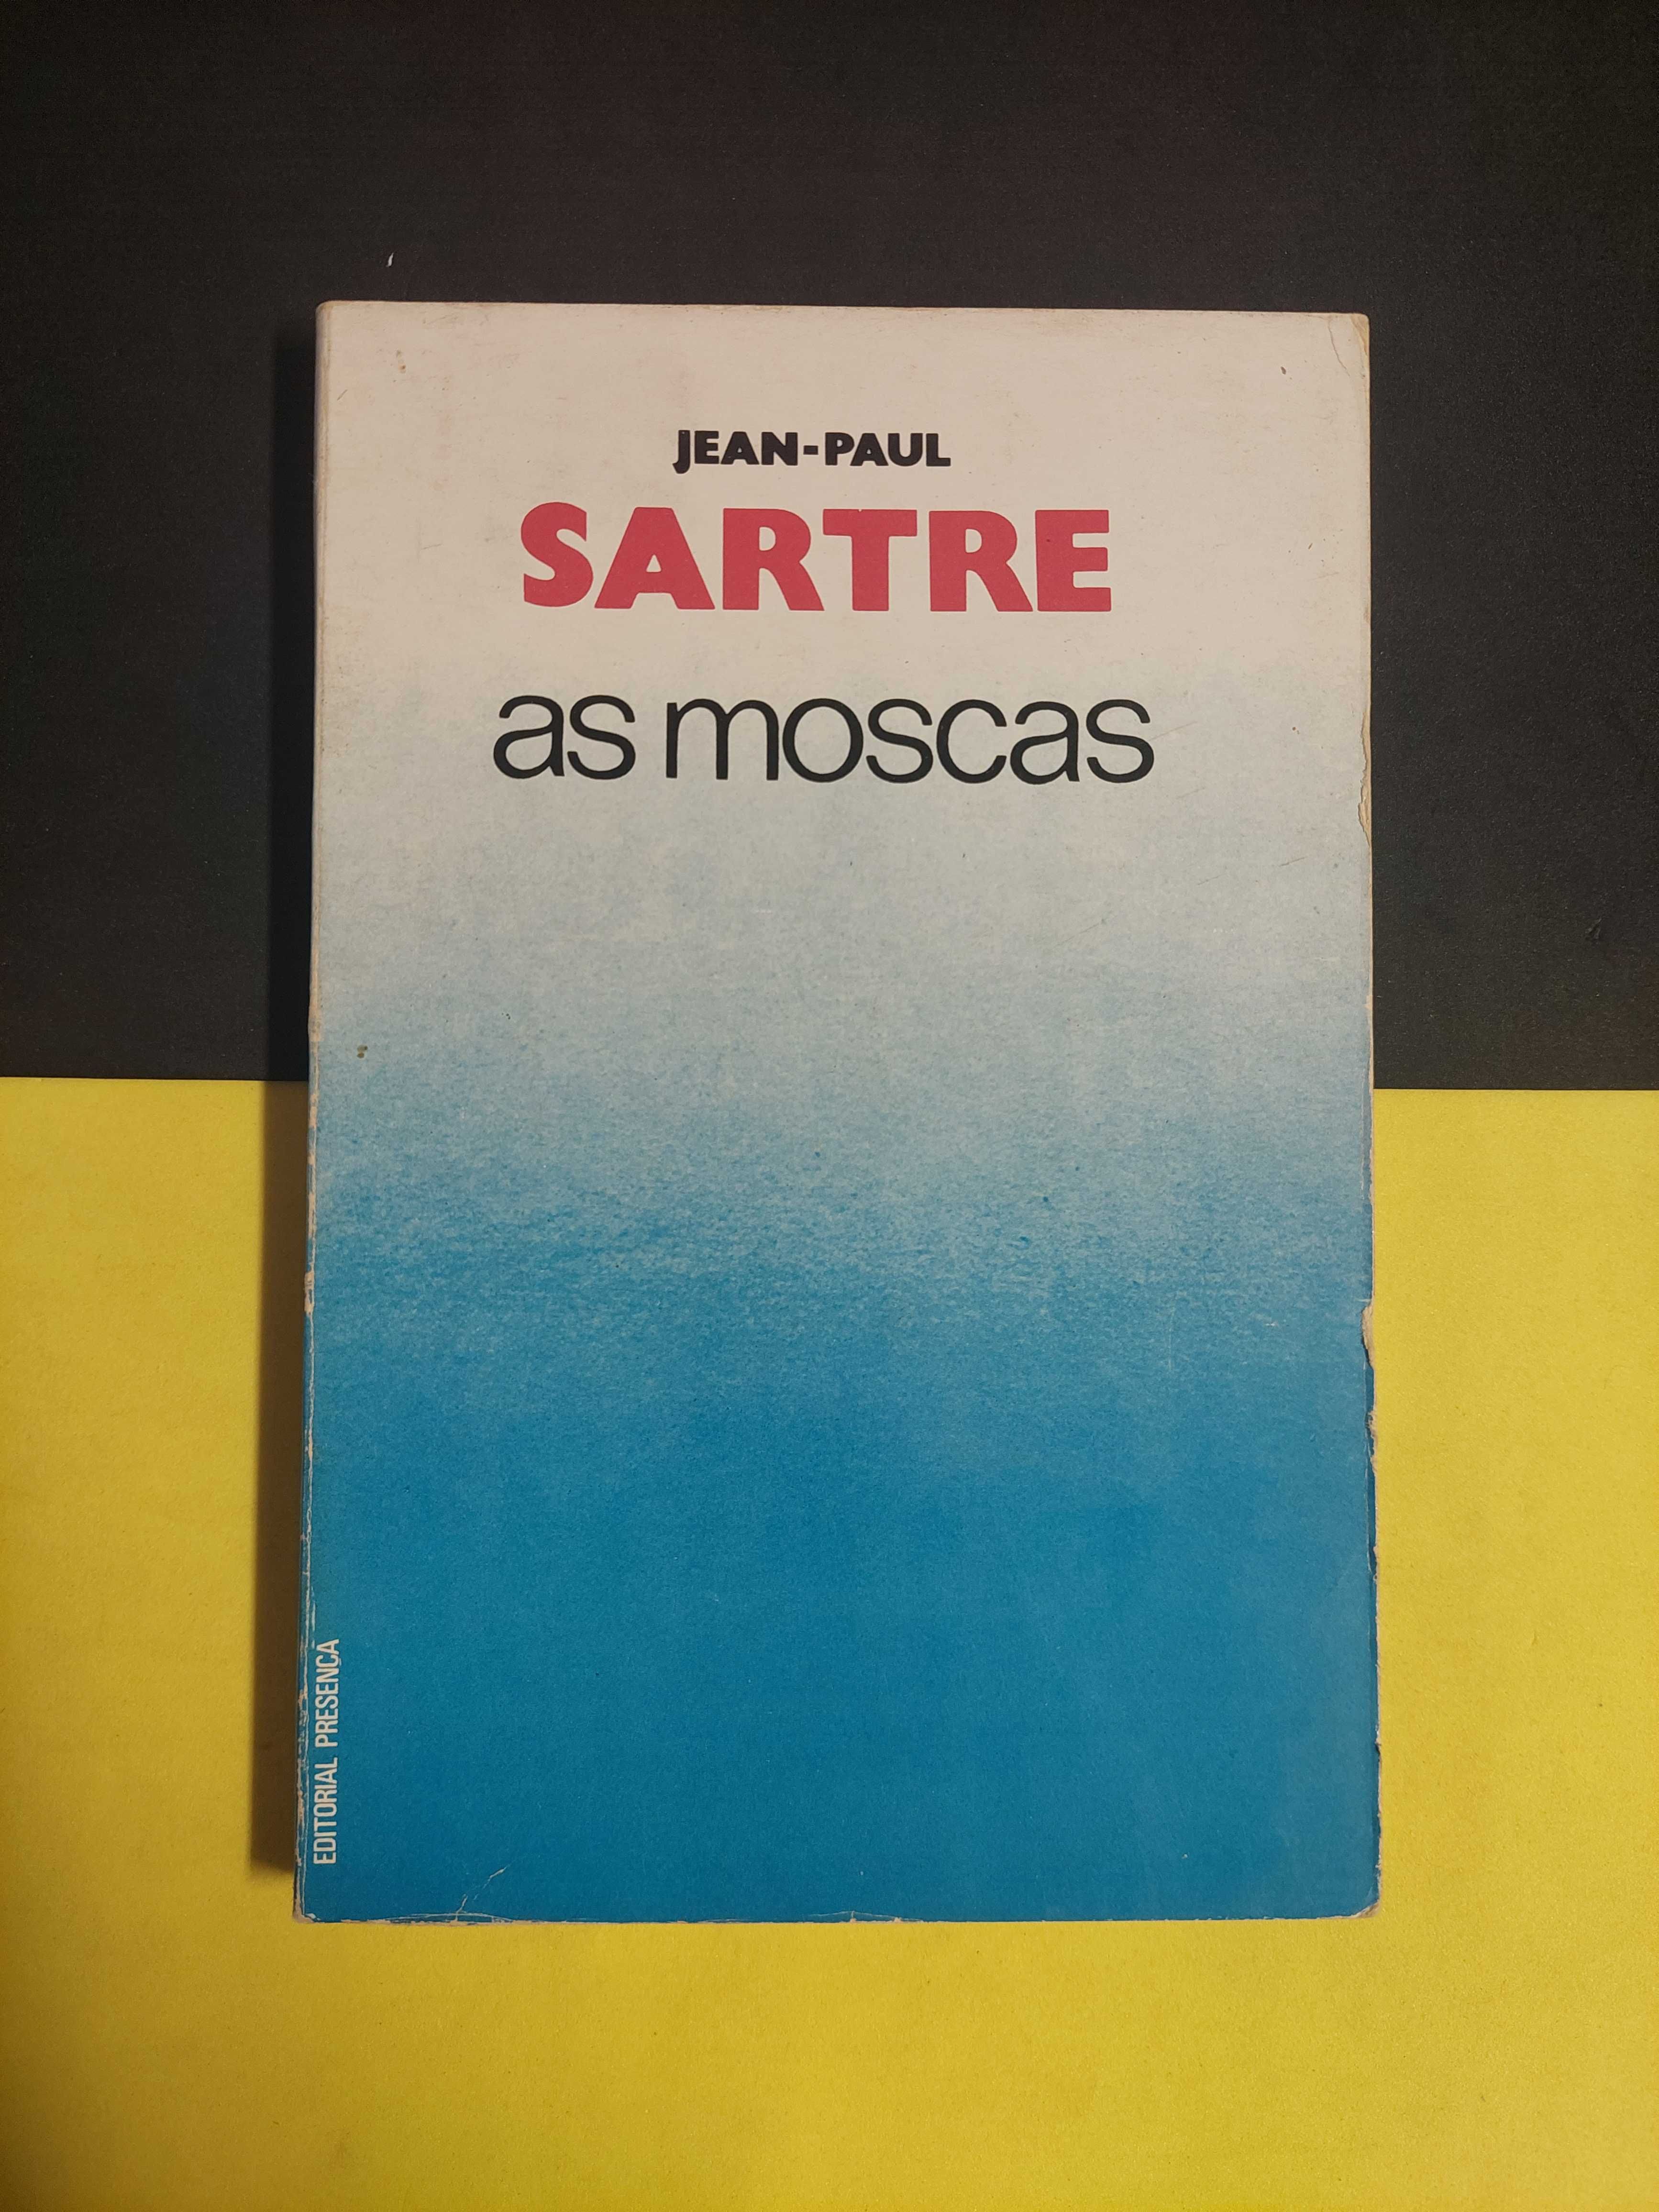 Jean-Paul Sartre - As moscas